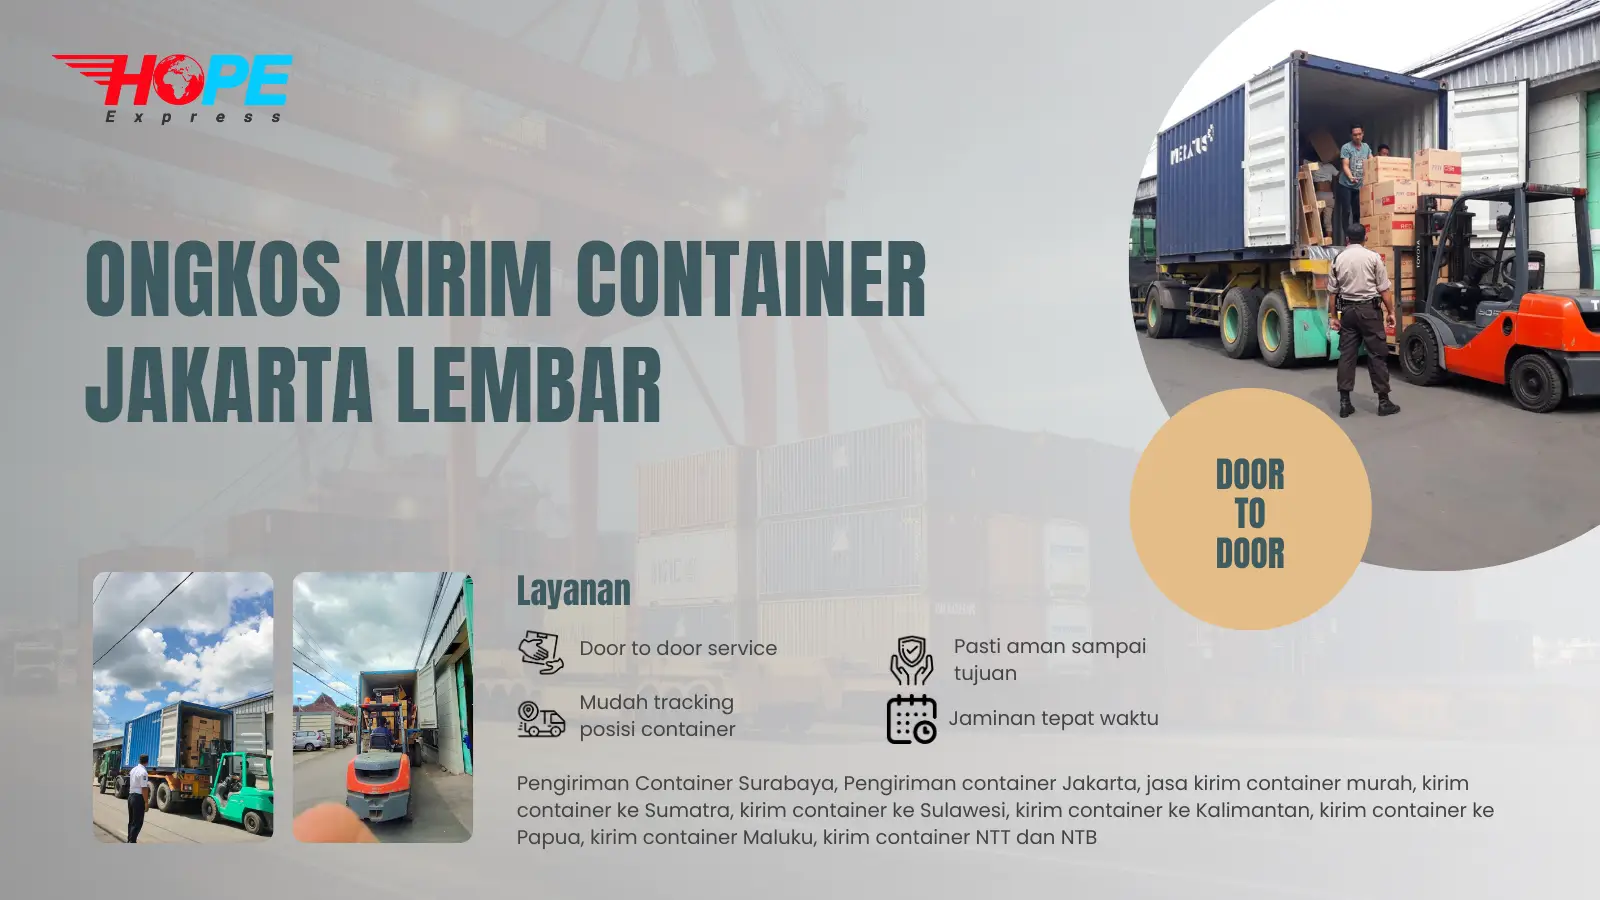 Ongkos Kirim Container Jakarta Lembar